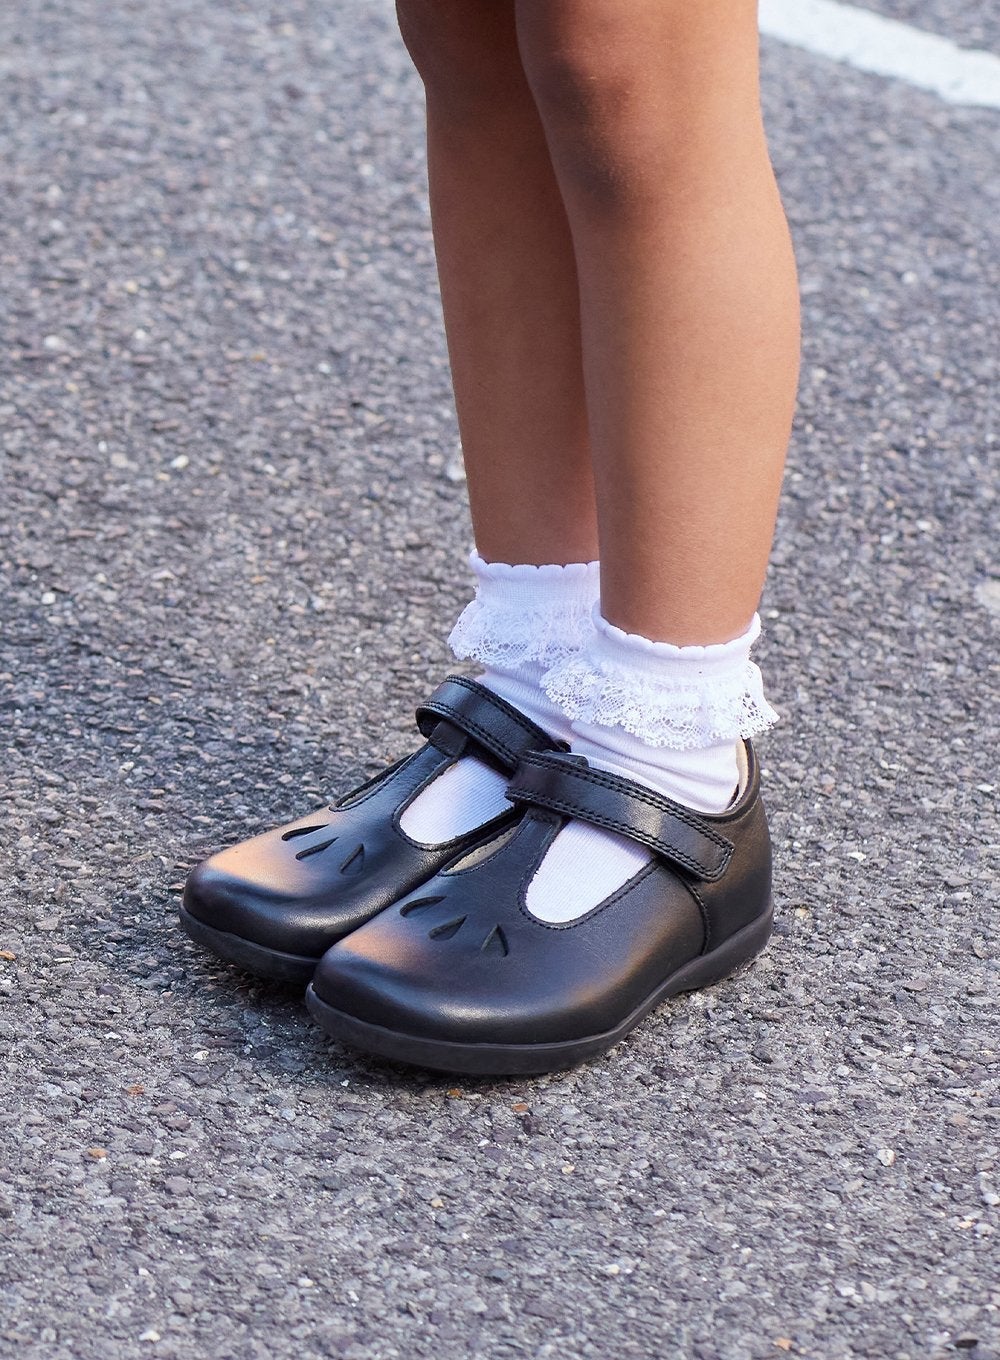 Hampton Classics Evie School Shoes in Black | Trotters Childrenswear